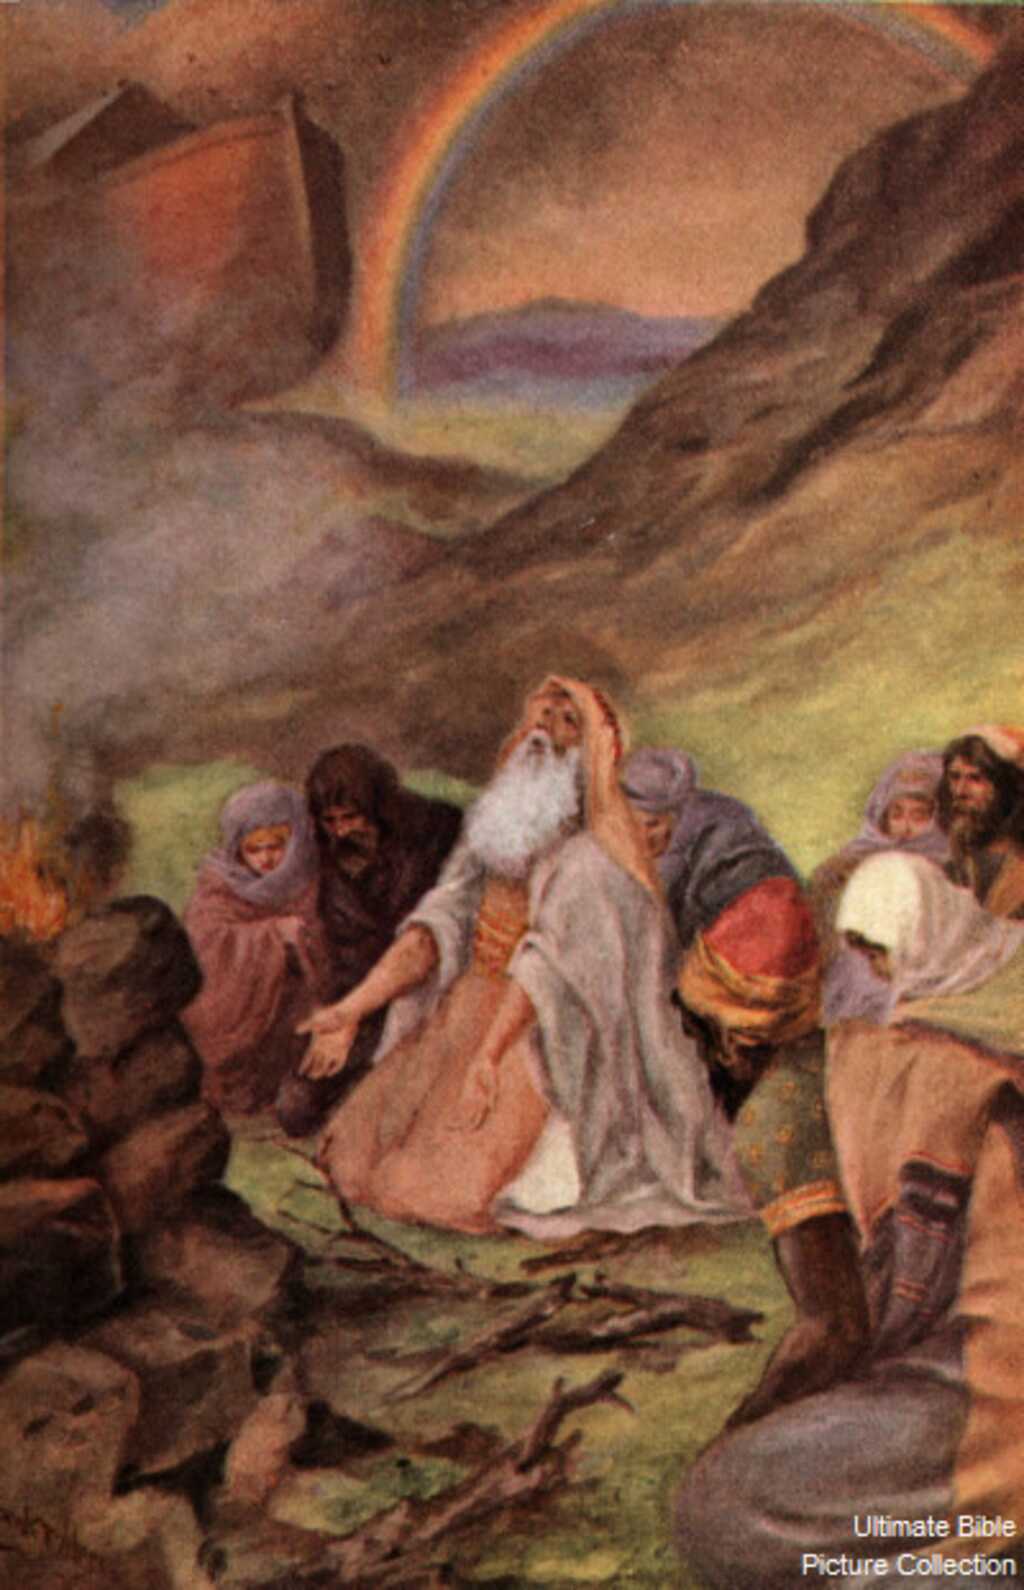 Bible Stories - God's Covenant with Noah - Genesis 9